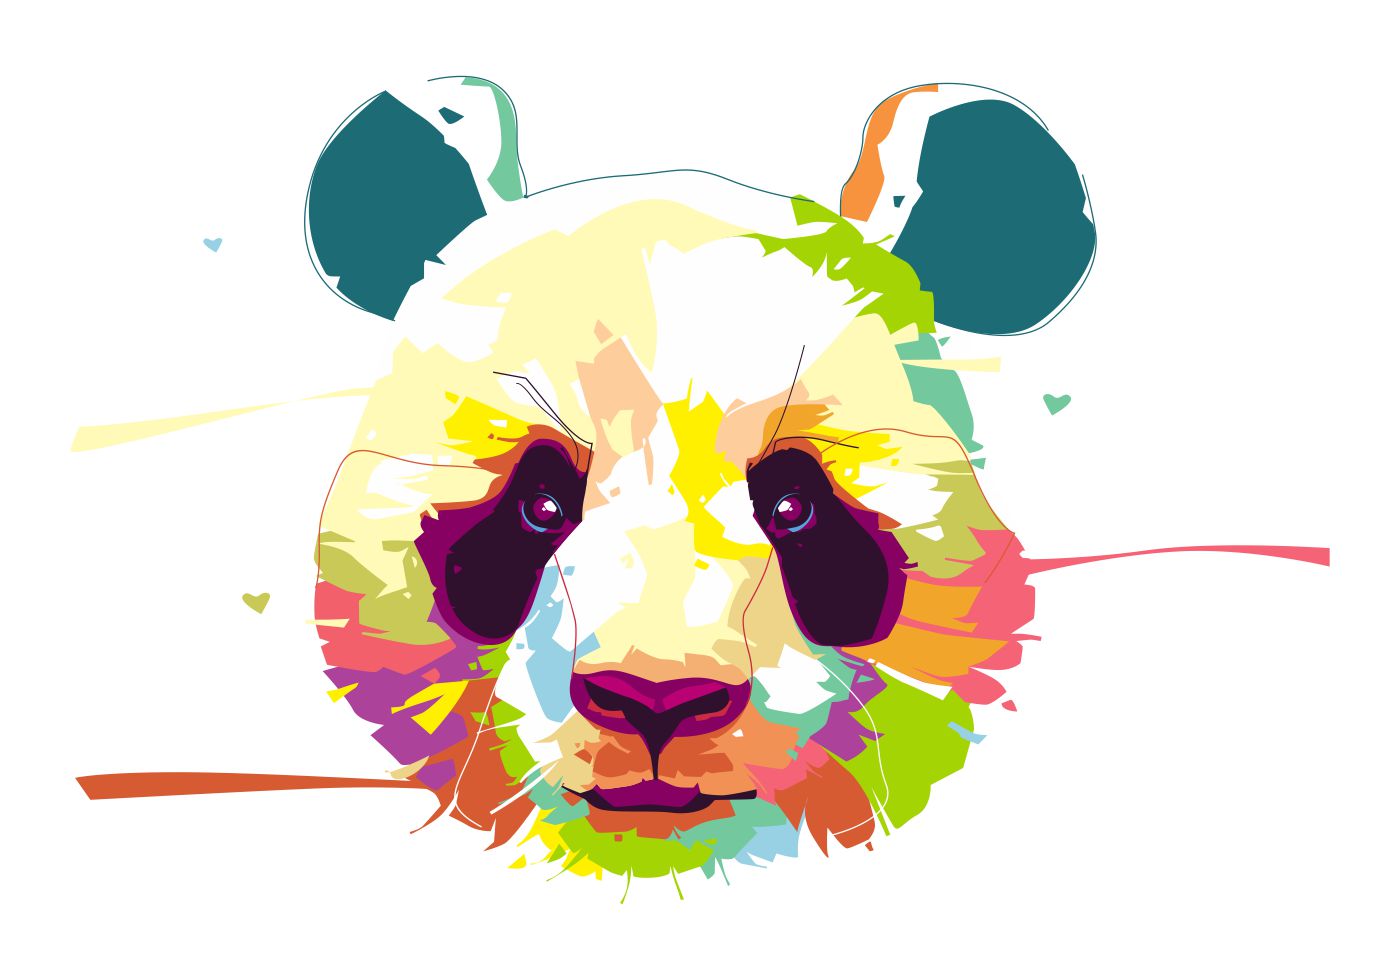 Download Panda - Animal Life - Popart Portrait - Download Free Vectors, Clipart Graphics & Vector Art